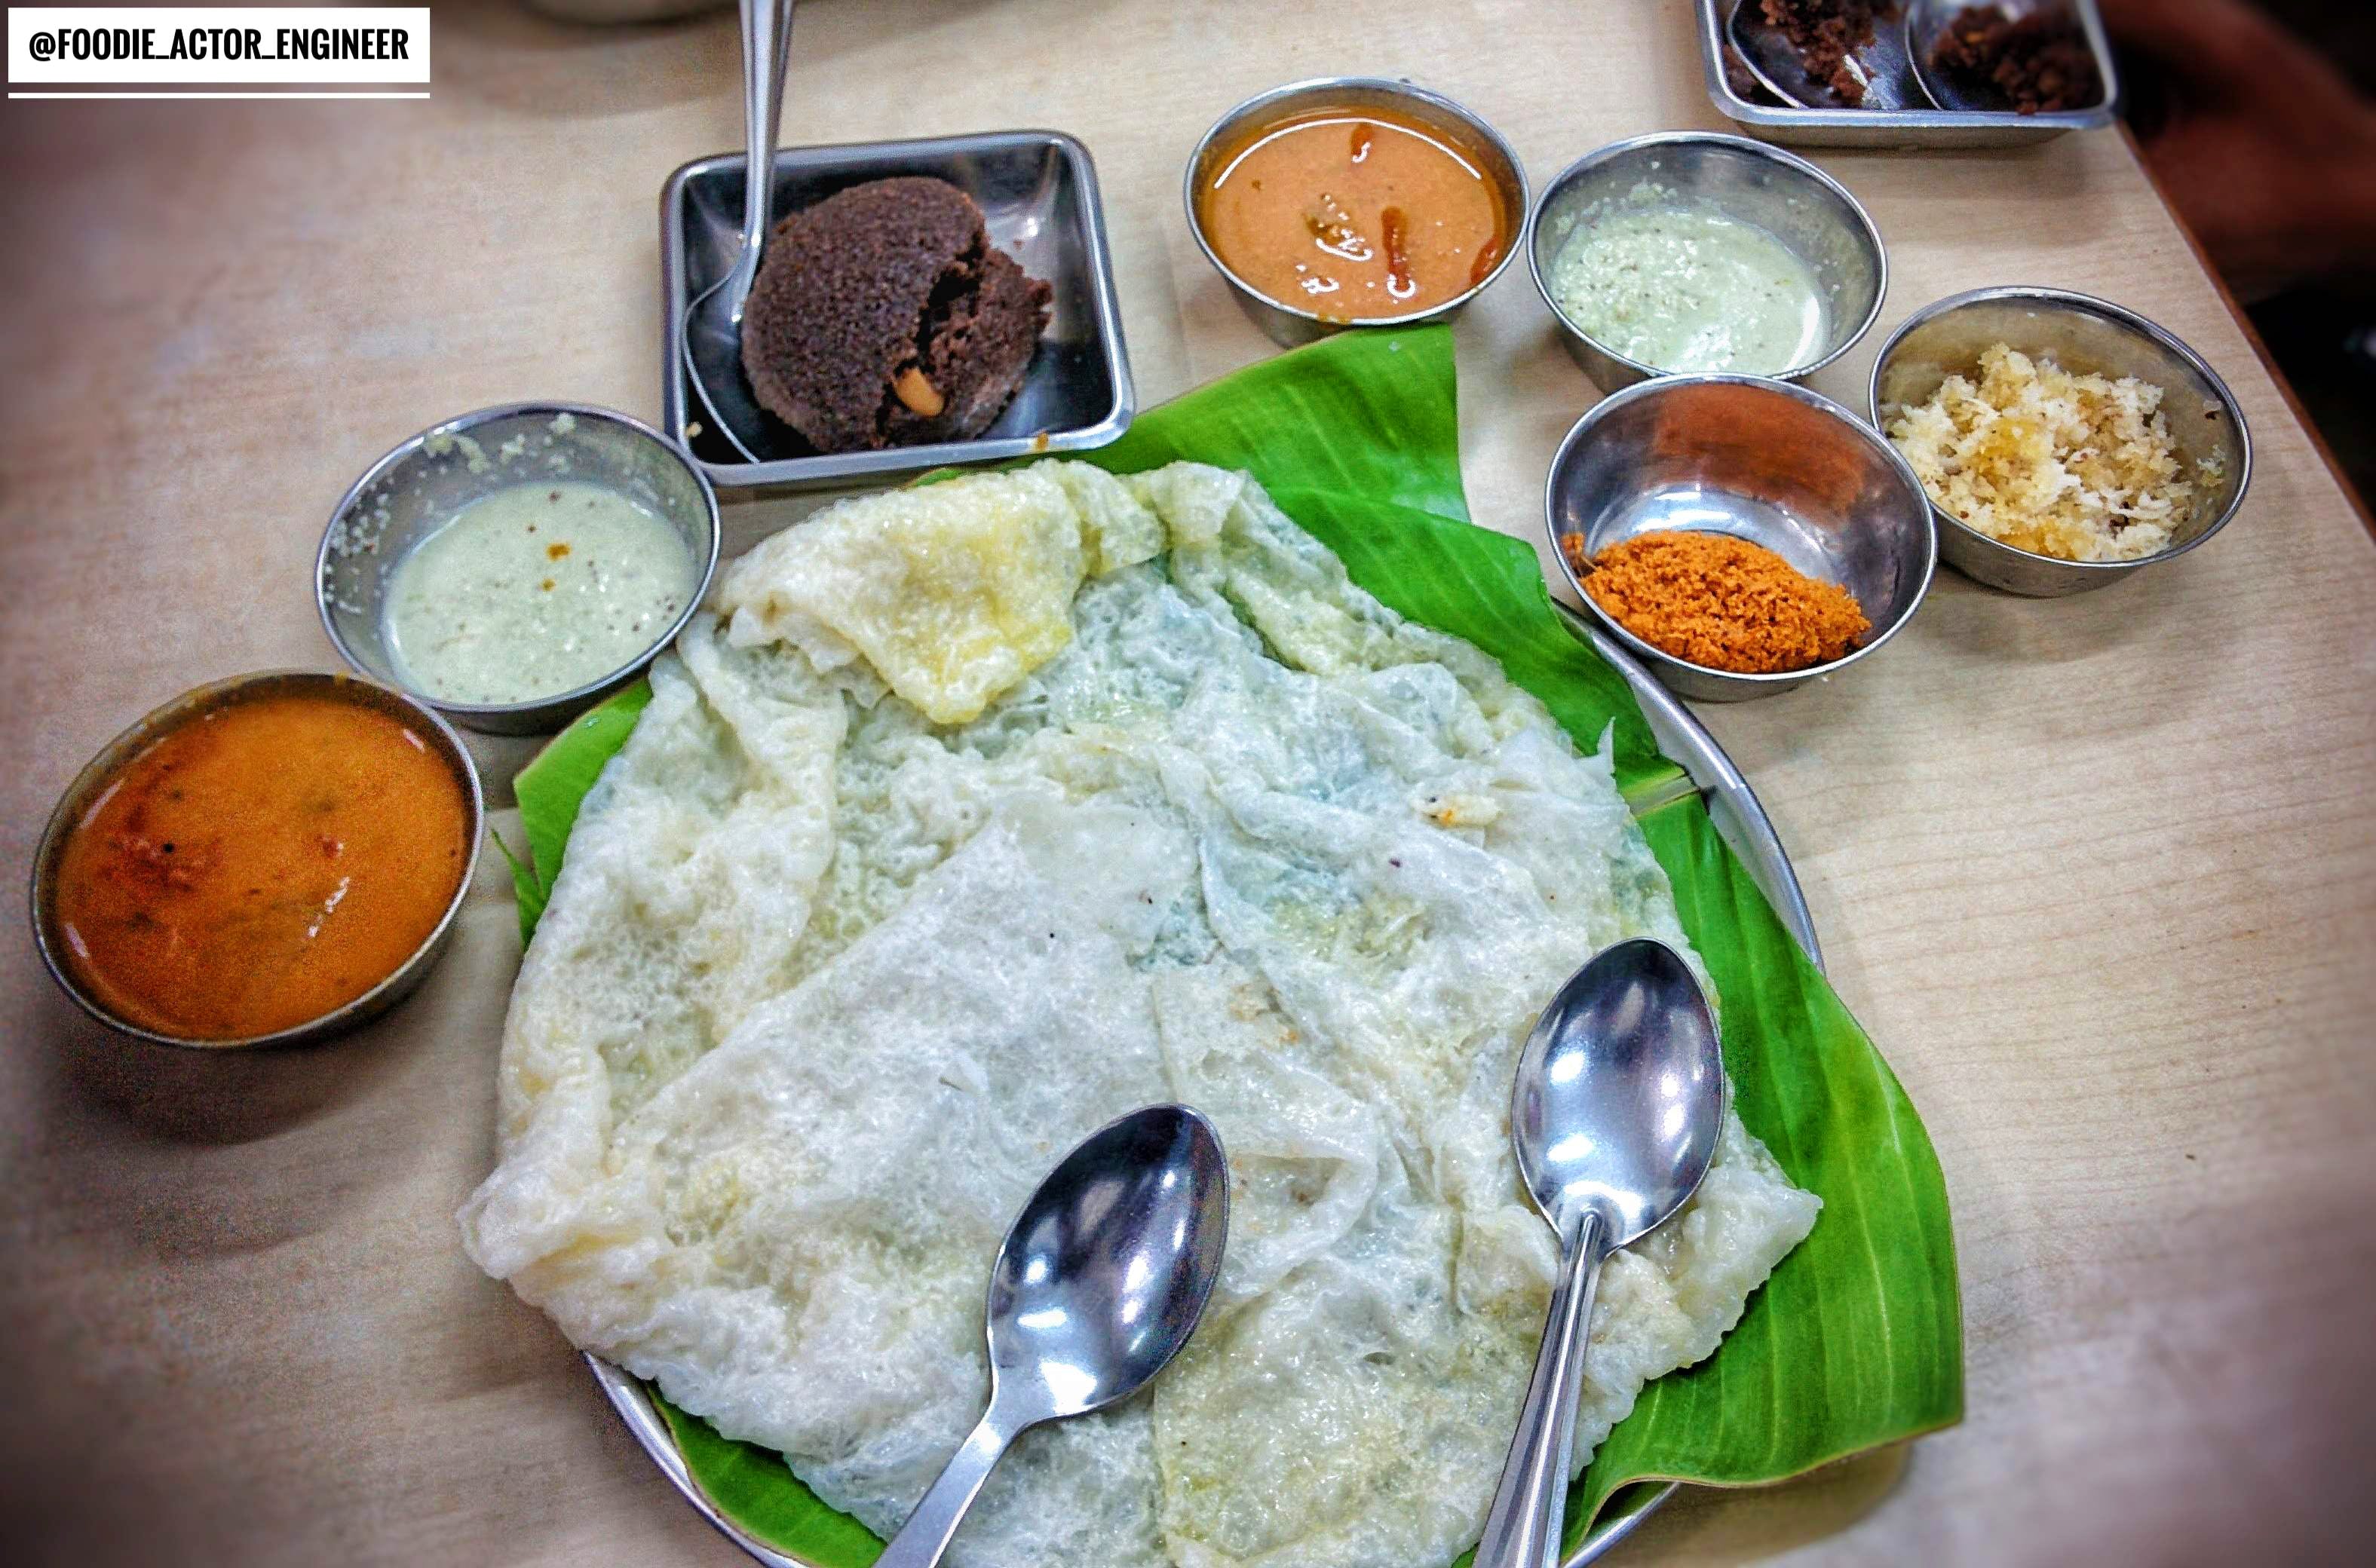 Food,Cuisine,Dish,Ingredient,Meal,Indian cuisine,Vegetarian food,Tamil food,Lunch,Produce